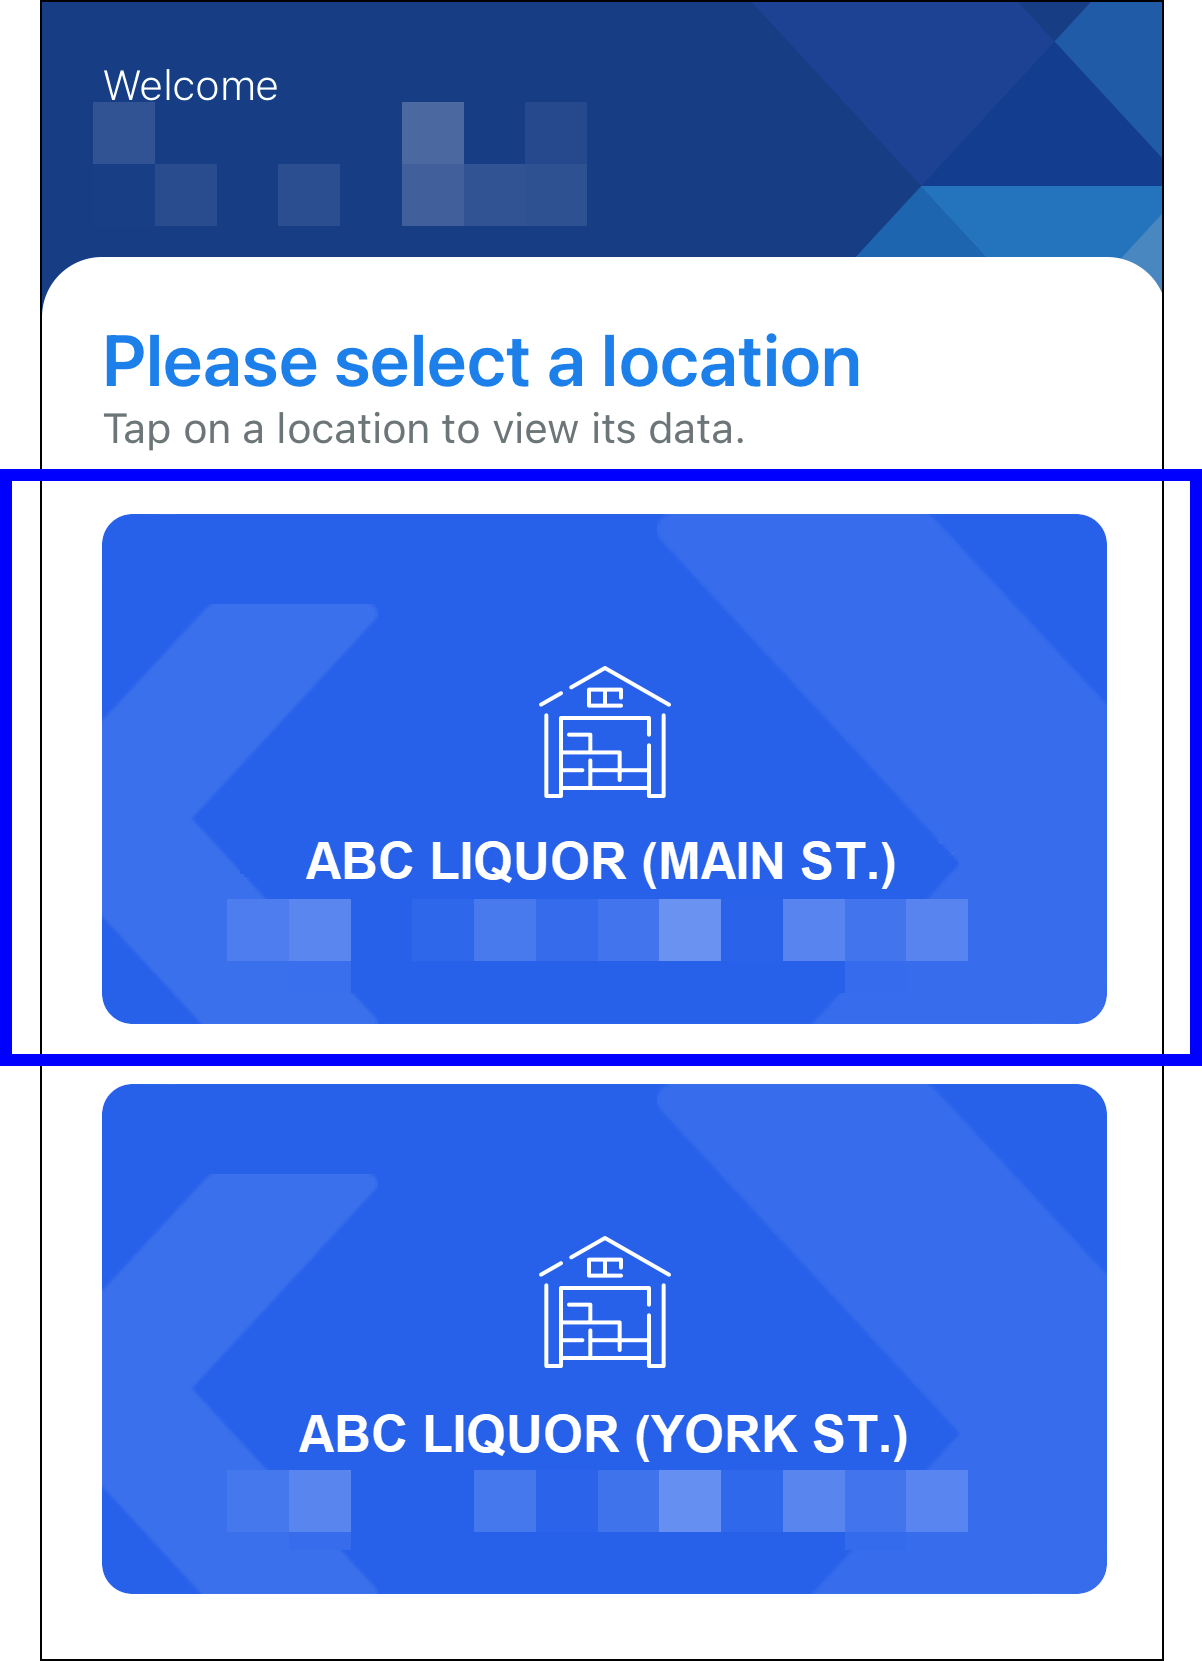 Sample location selected on app login screen